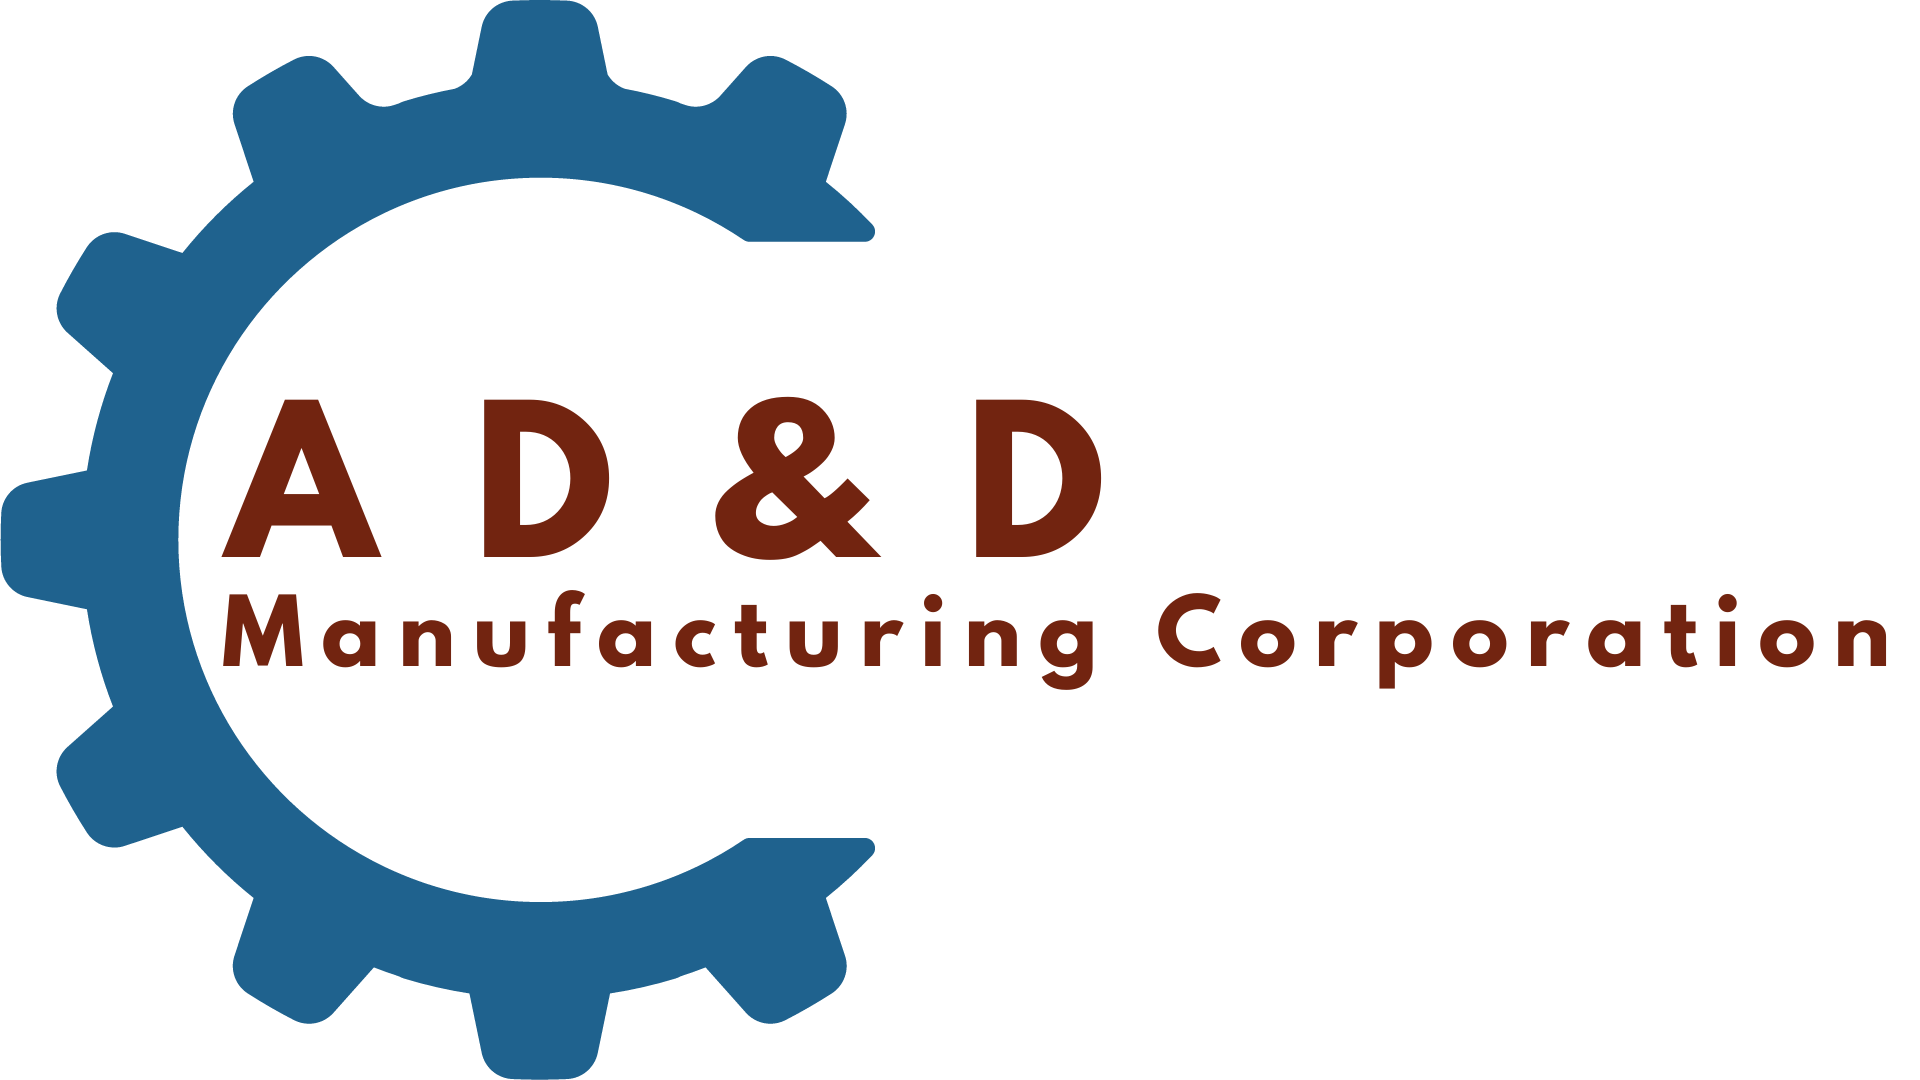 A D & D Manufacturing Corporation logo